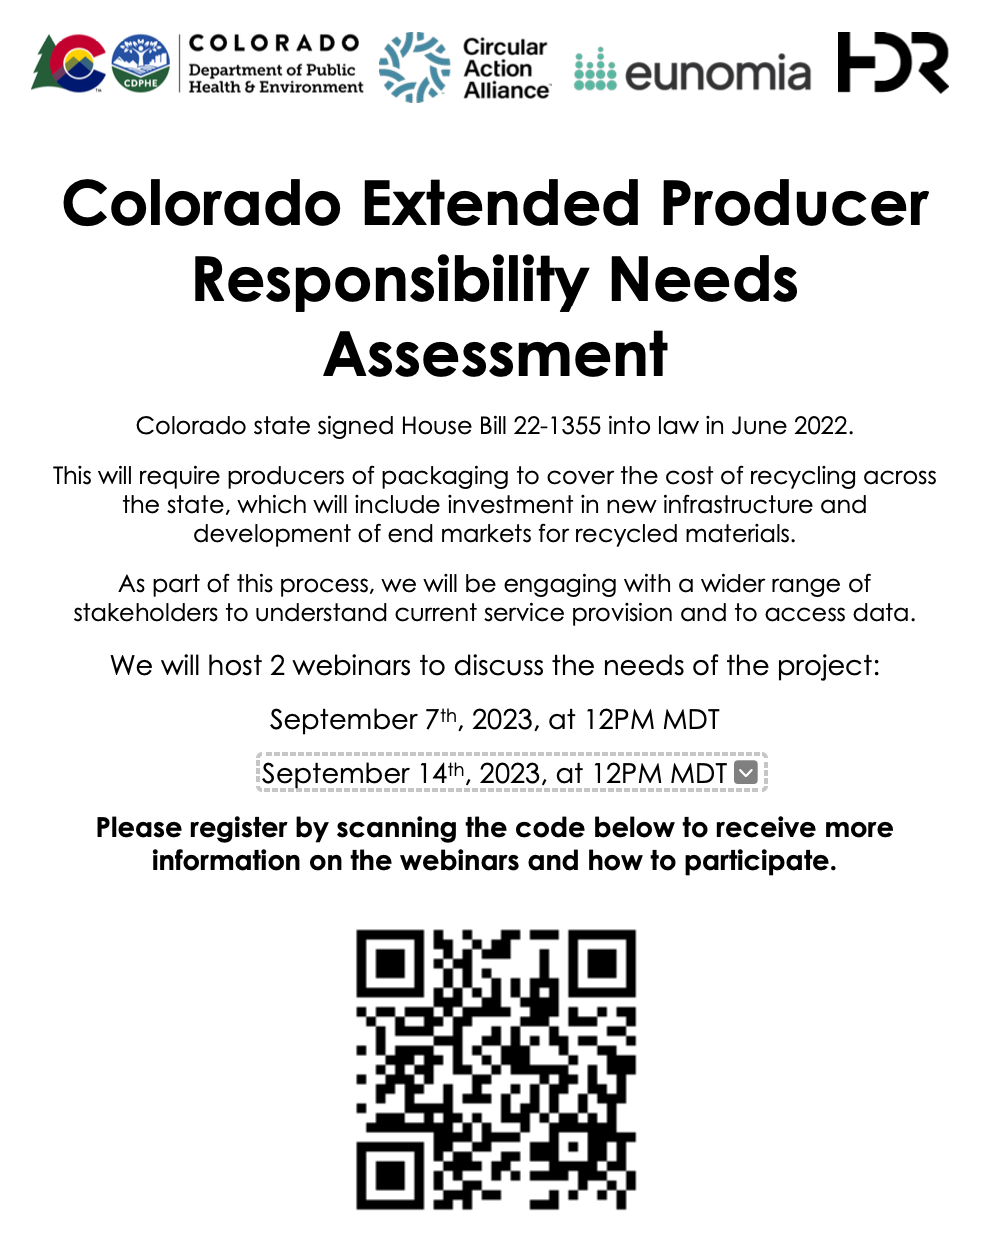 Producer Responsibility Webinar Registration